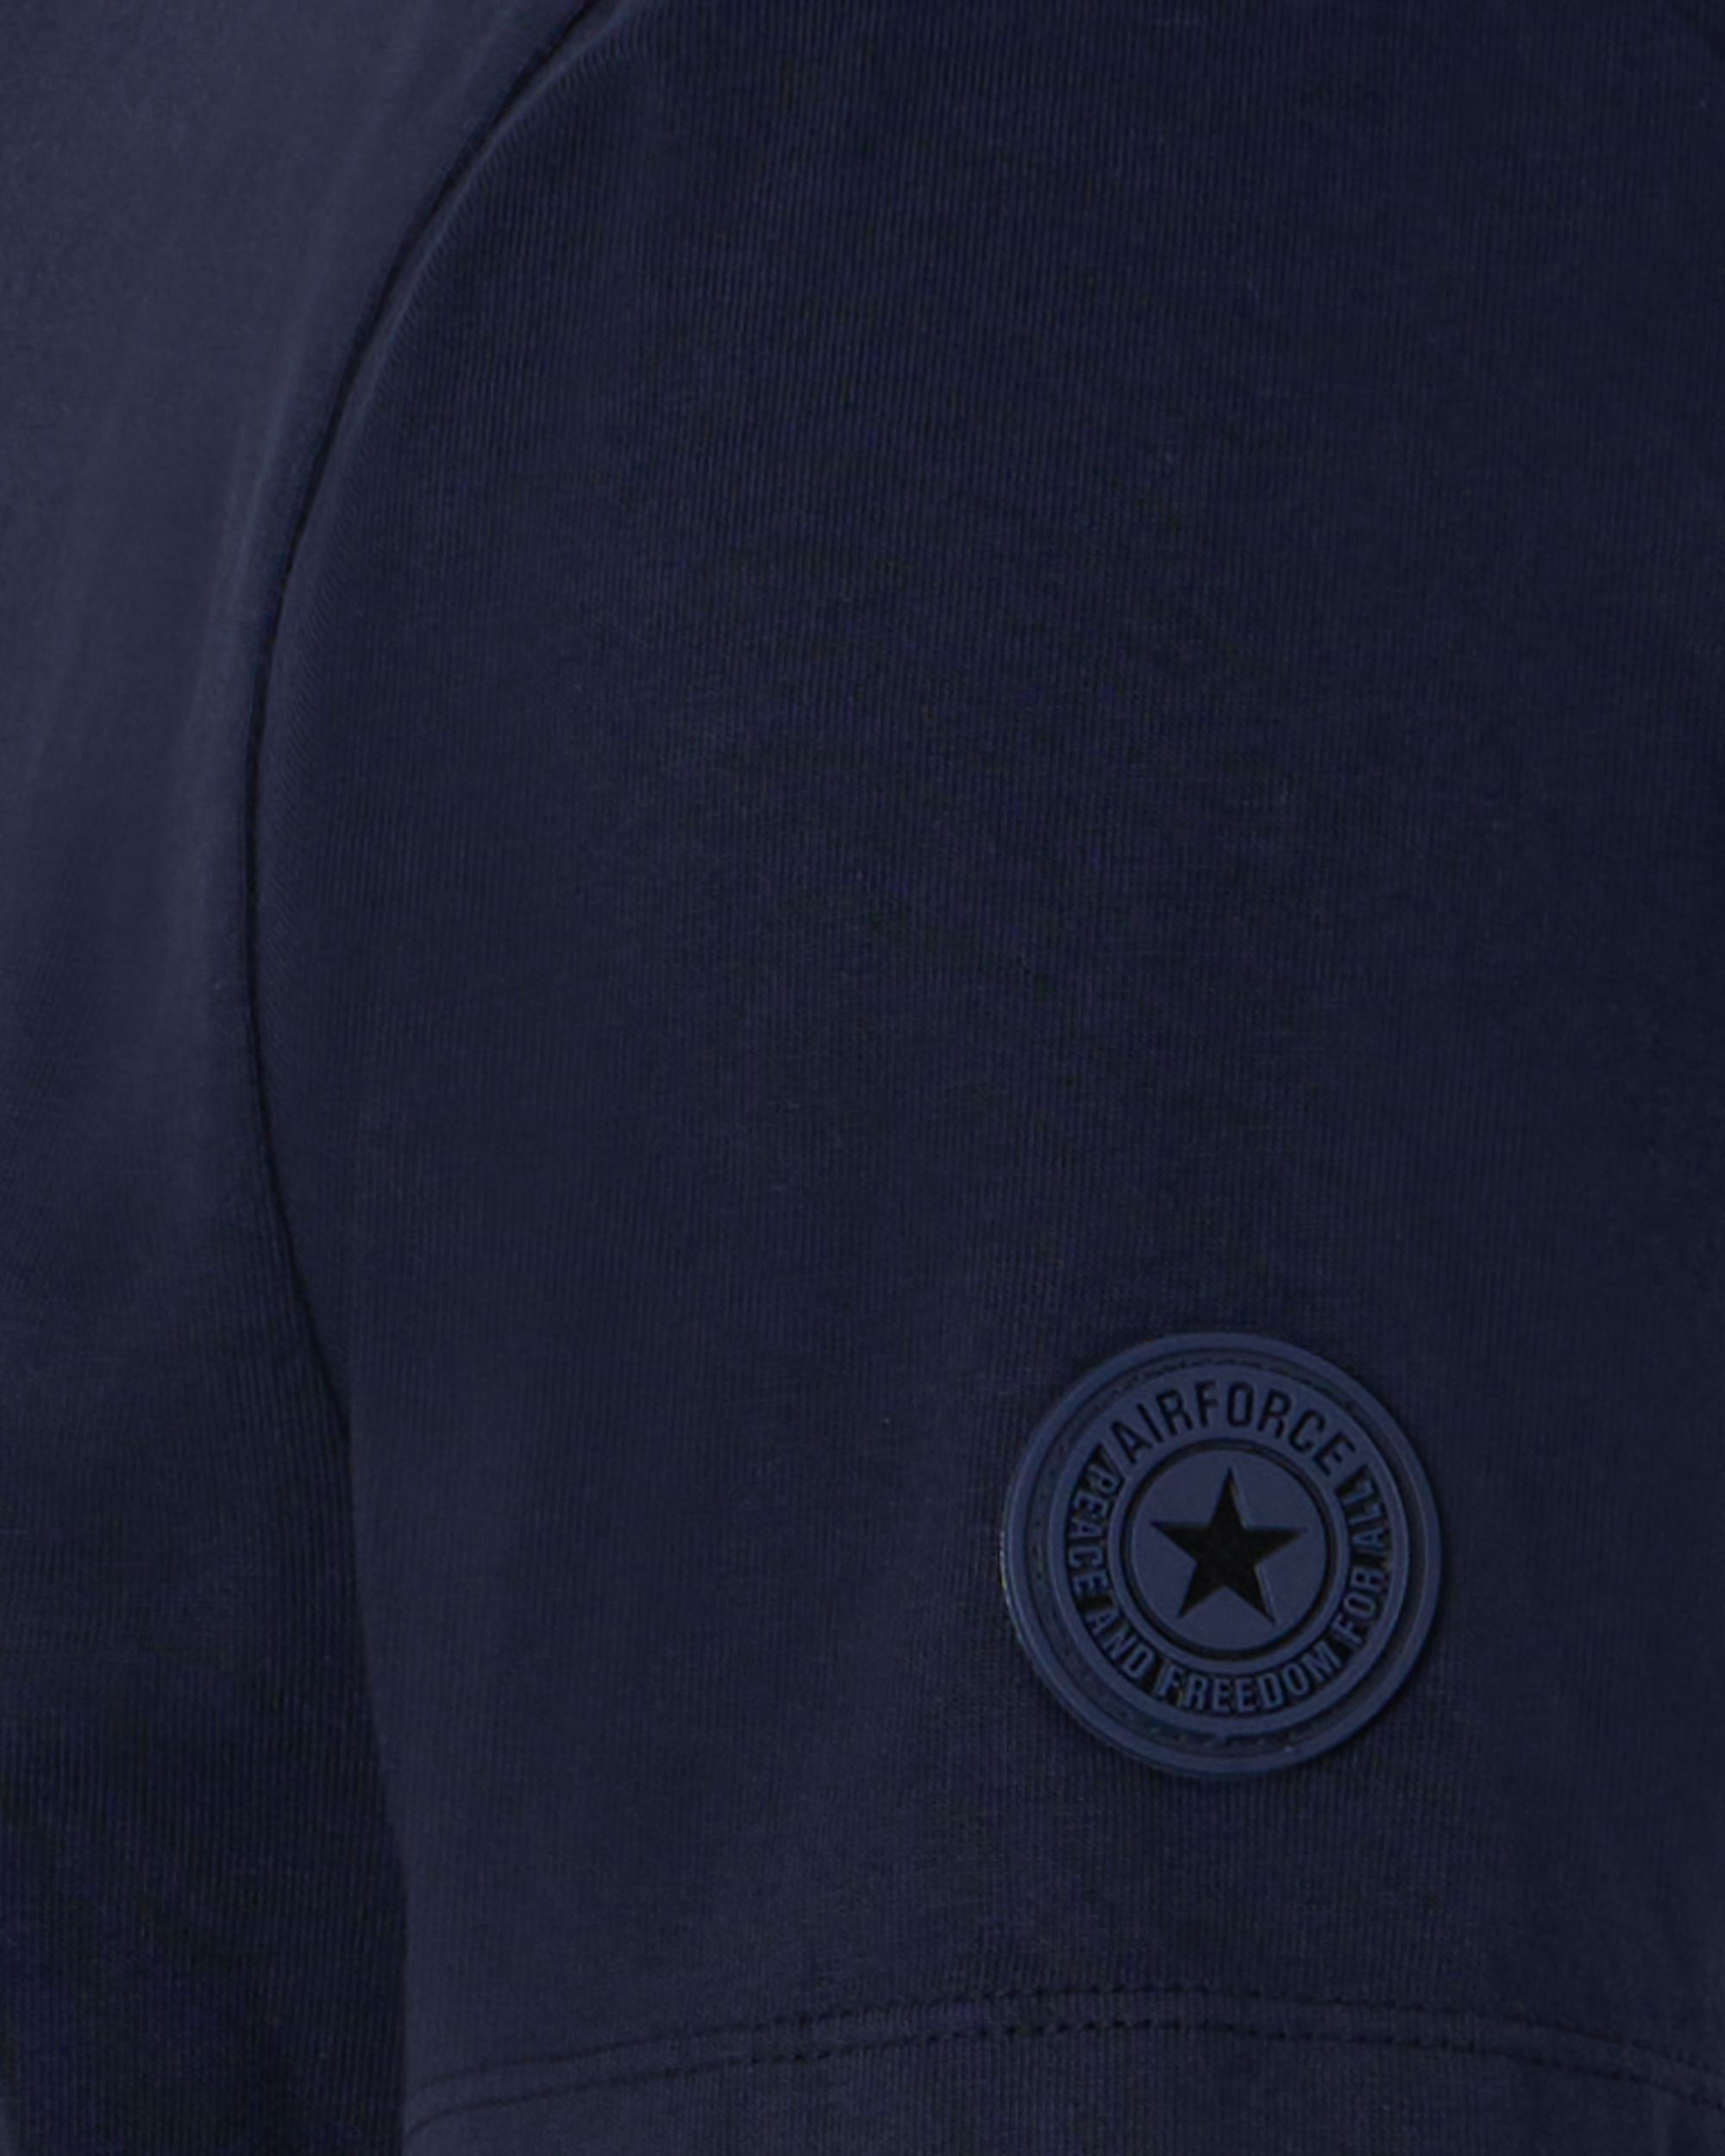 Airforce T-shirt KM Donker blauw 092919-001-L